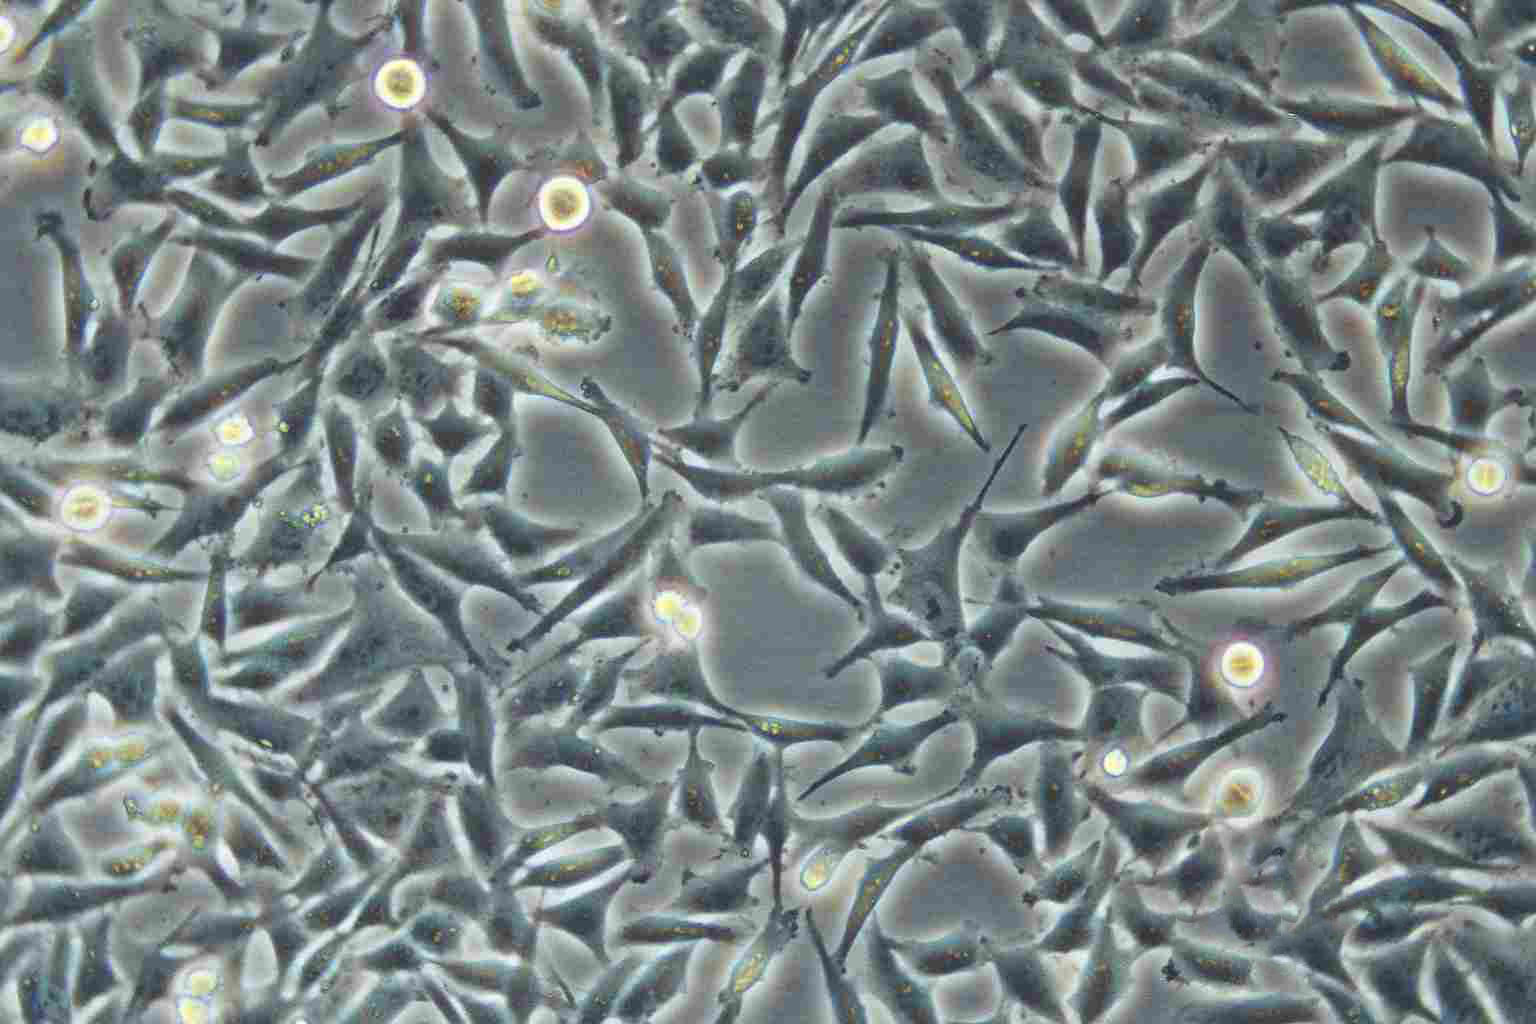 ARPE-19 epithelioid cells人视网膜色素上皮细胞系,ARPE-19 epithelioid cells